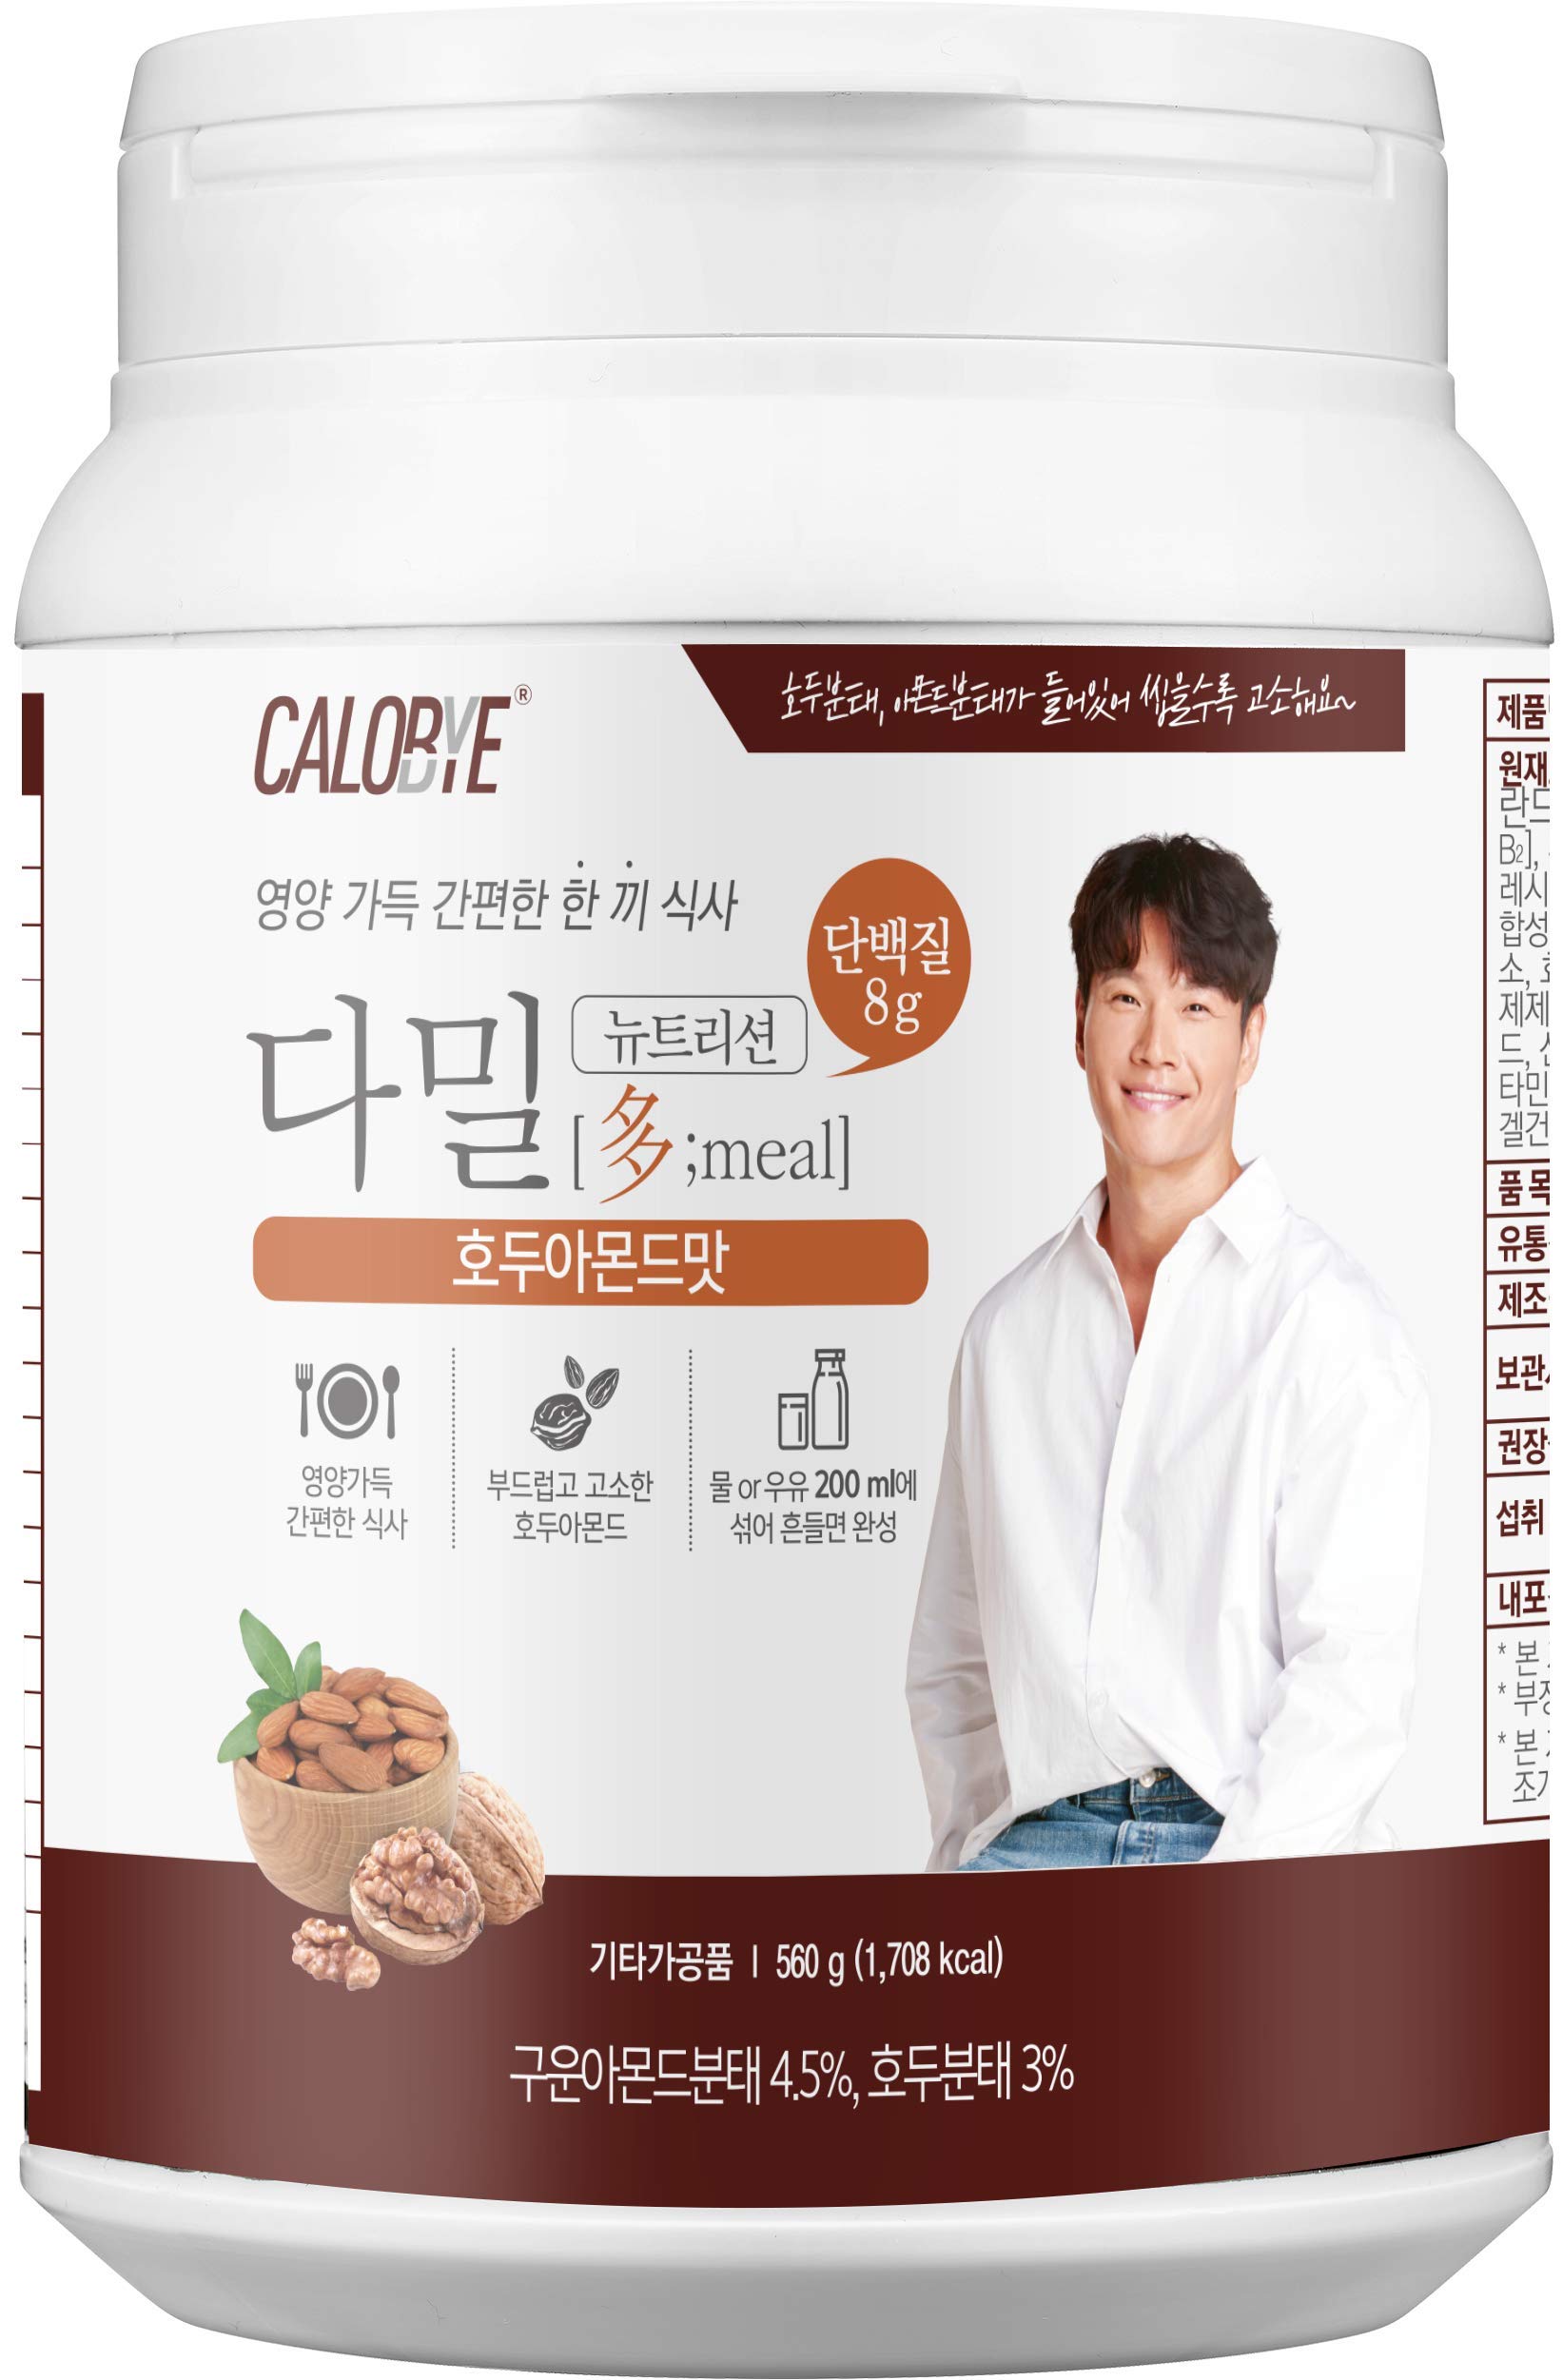 CALOBYE DA MEAL- KOREA Balanced Meal Replacement Powder, Walnut Almond Flavor,14 Servings (Bulk 560g), Vitamins & Minerals, Nutrition Shake based P...